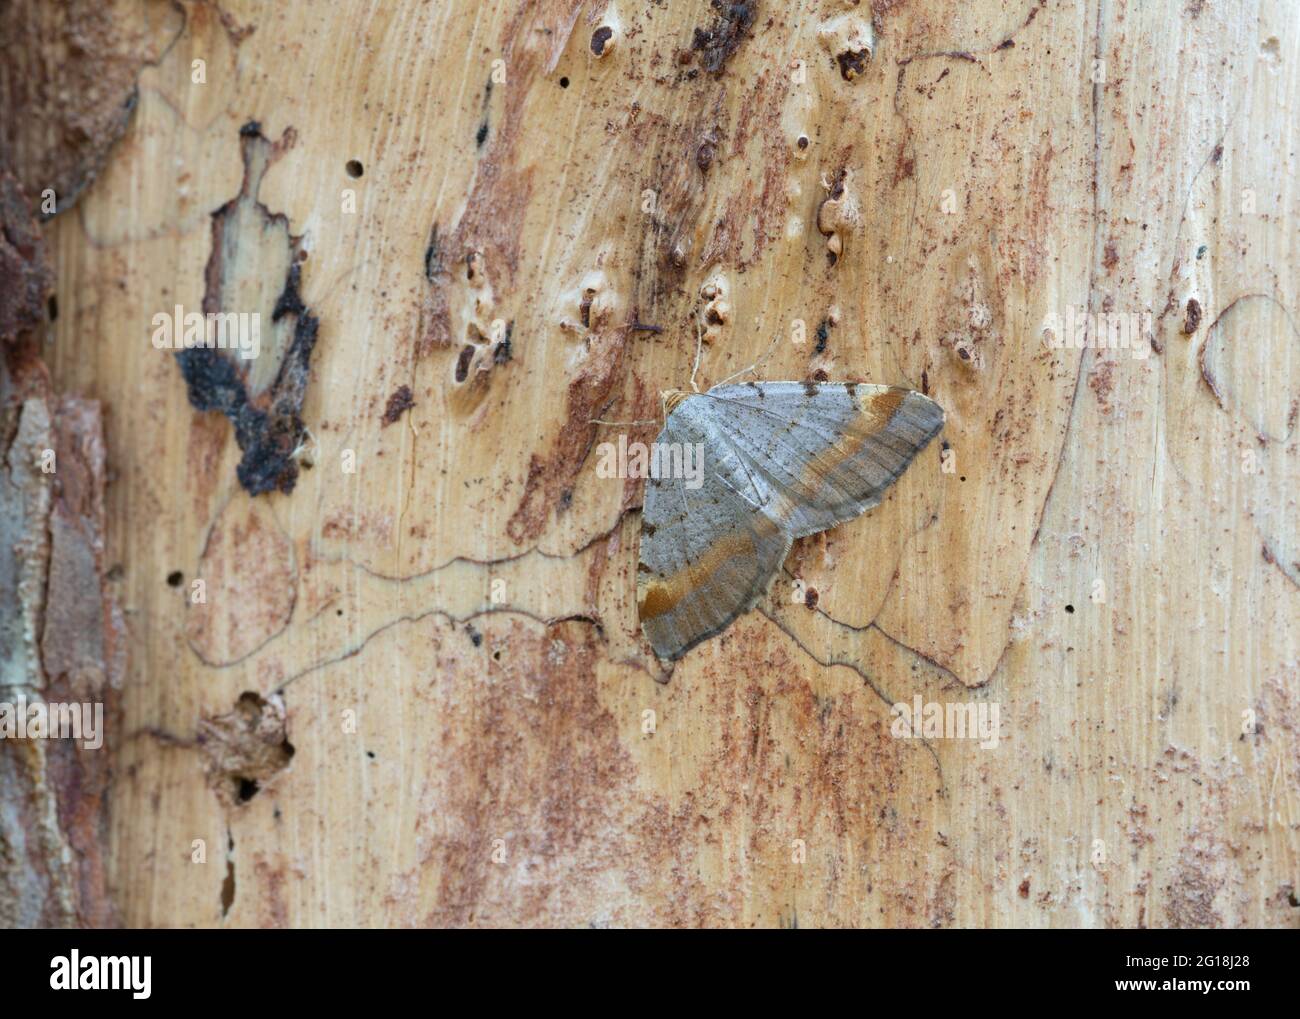 Tawny-barred angle, Macaria liturata resting on pine wood Stock Photo